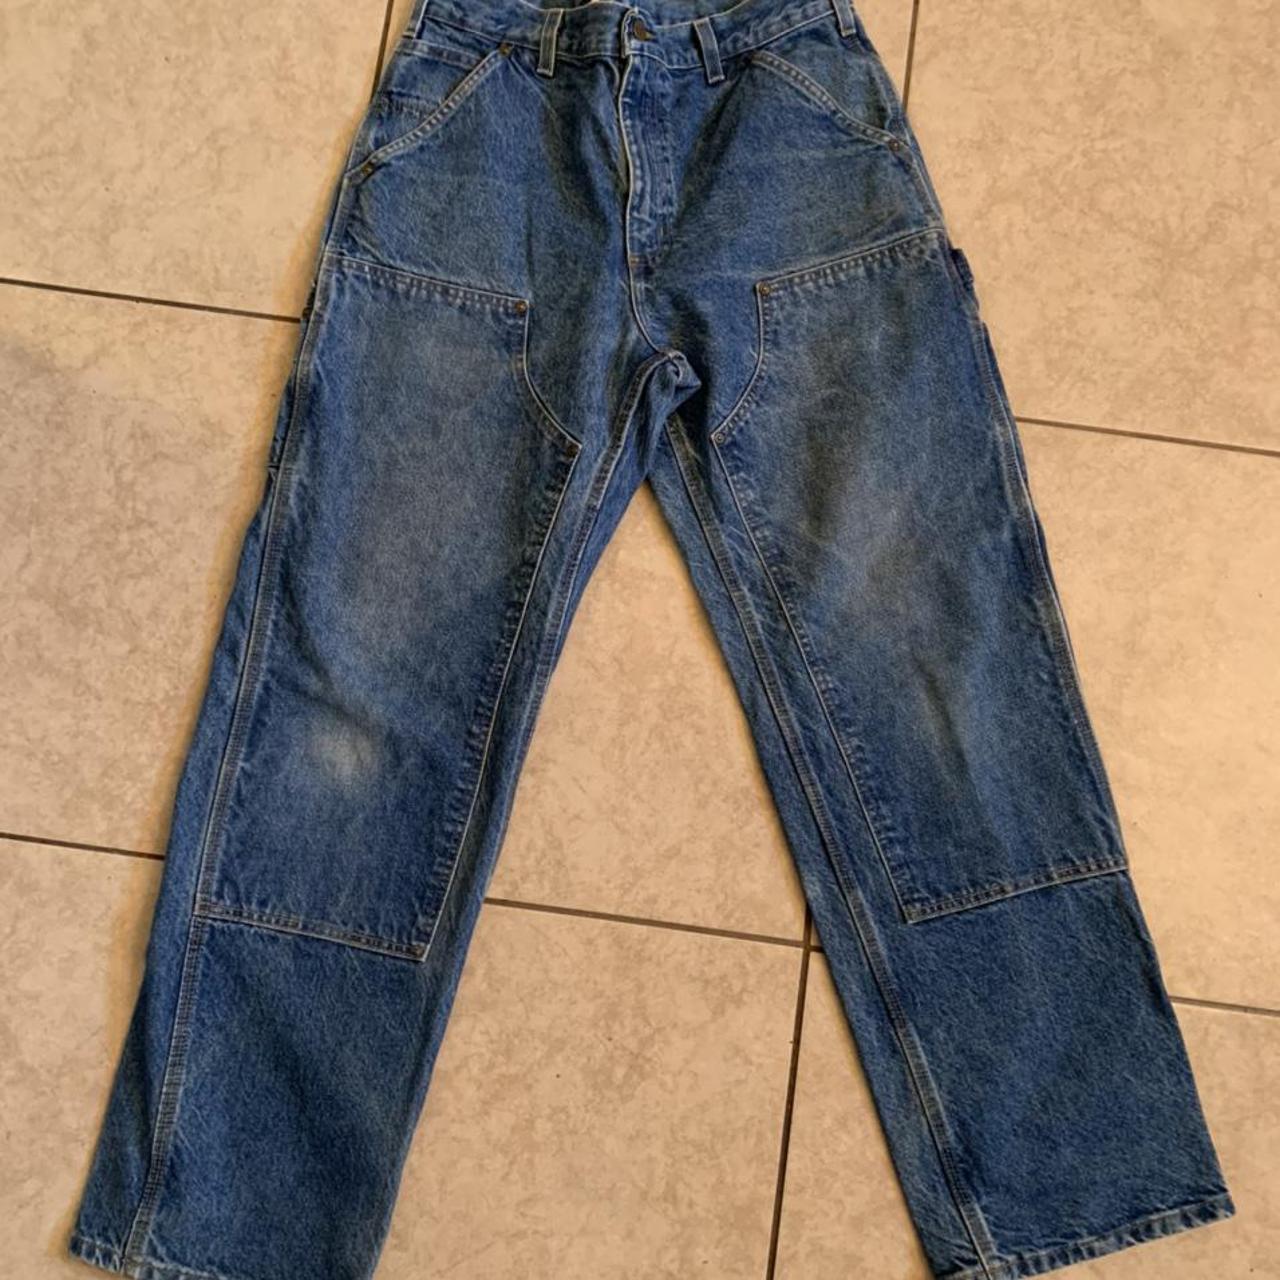 Carhart double knee jeans size 32x32!... - Depop